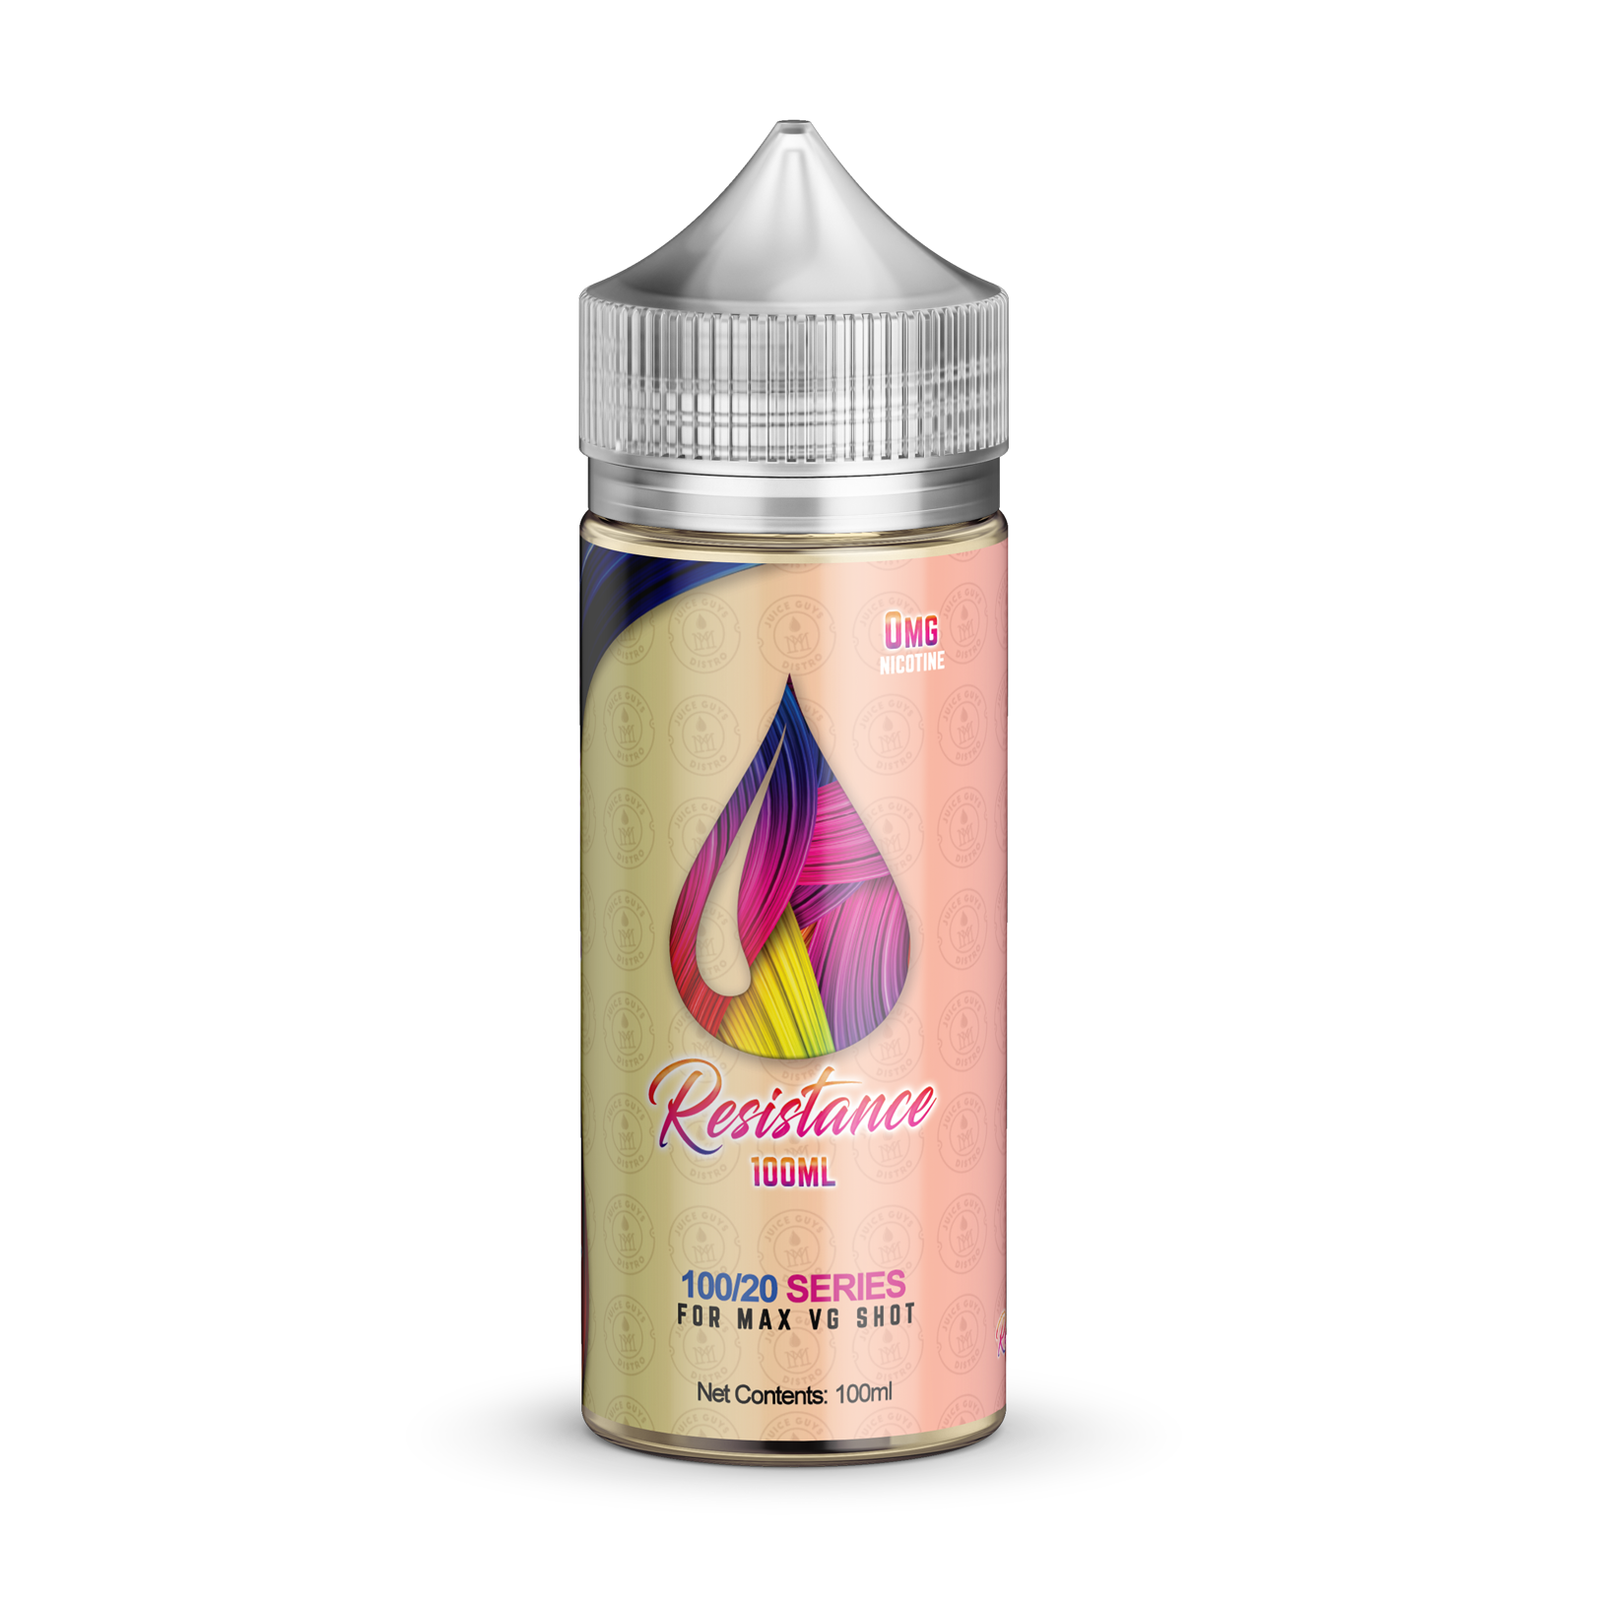 Juiceguys E-liquid